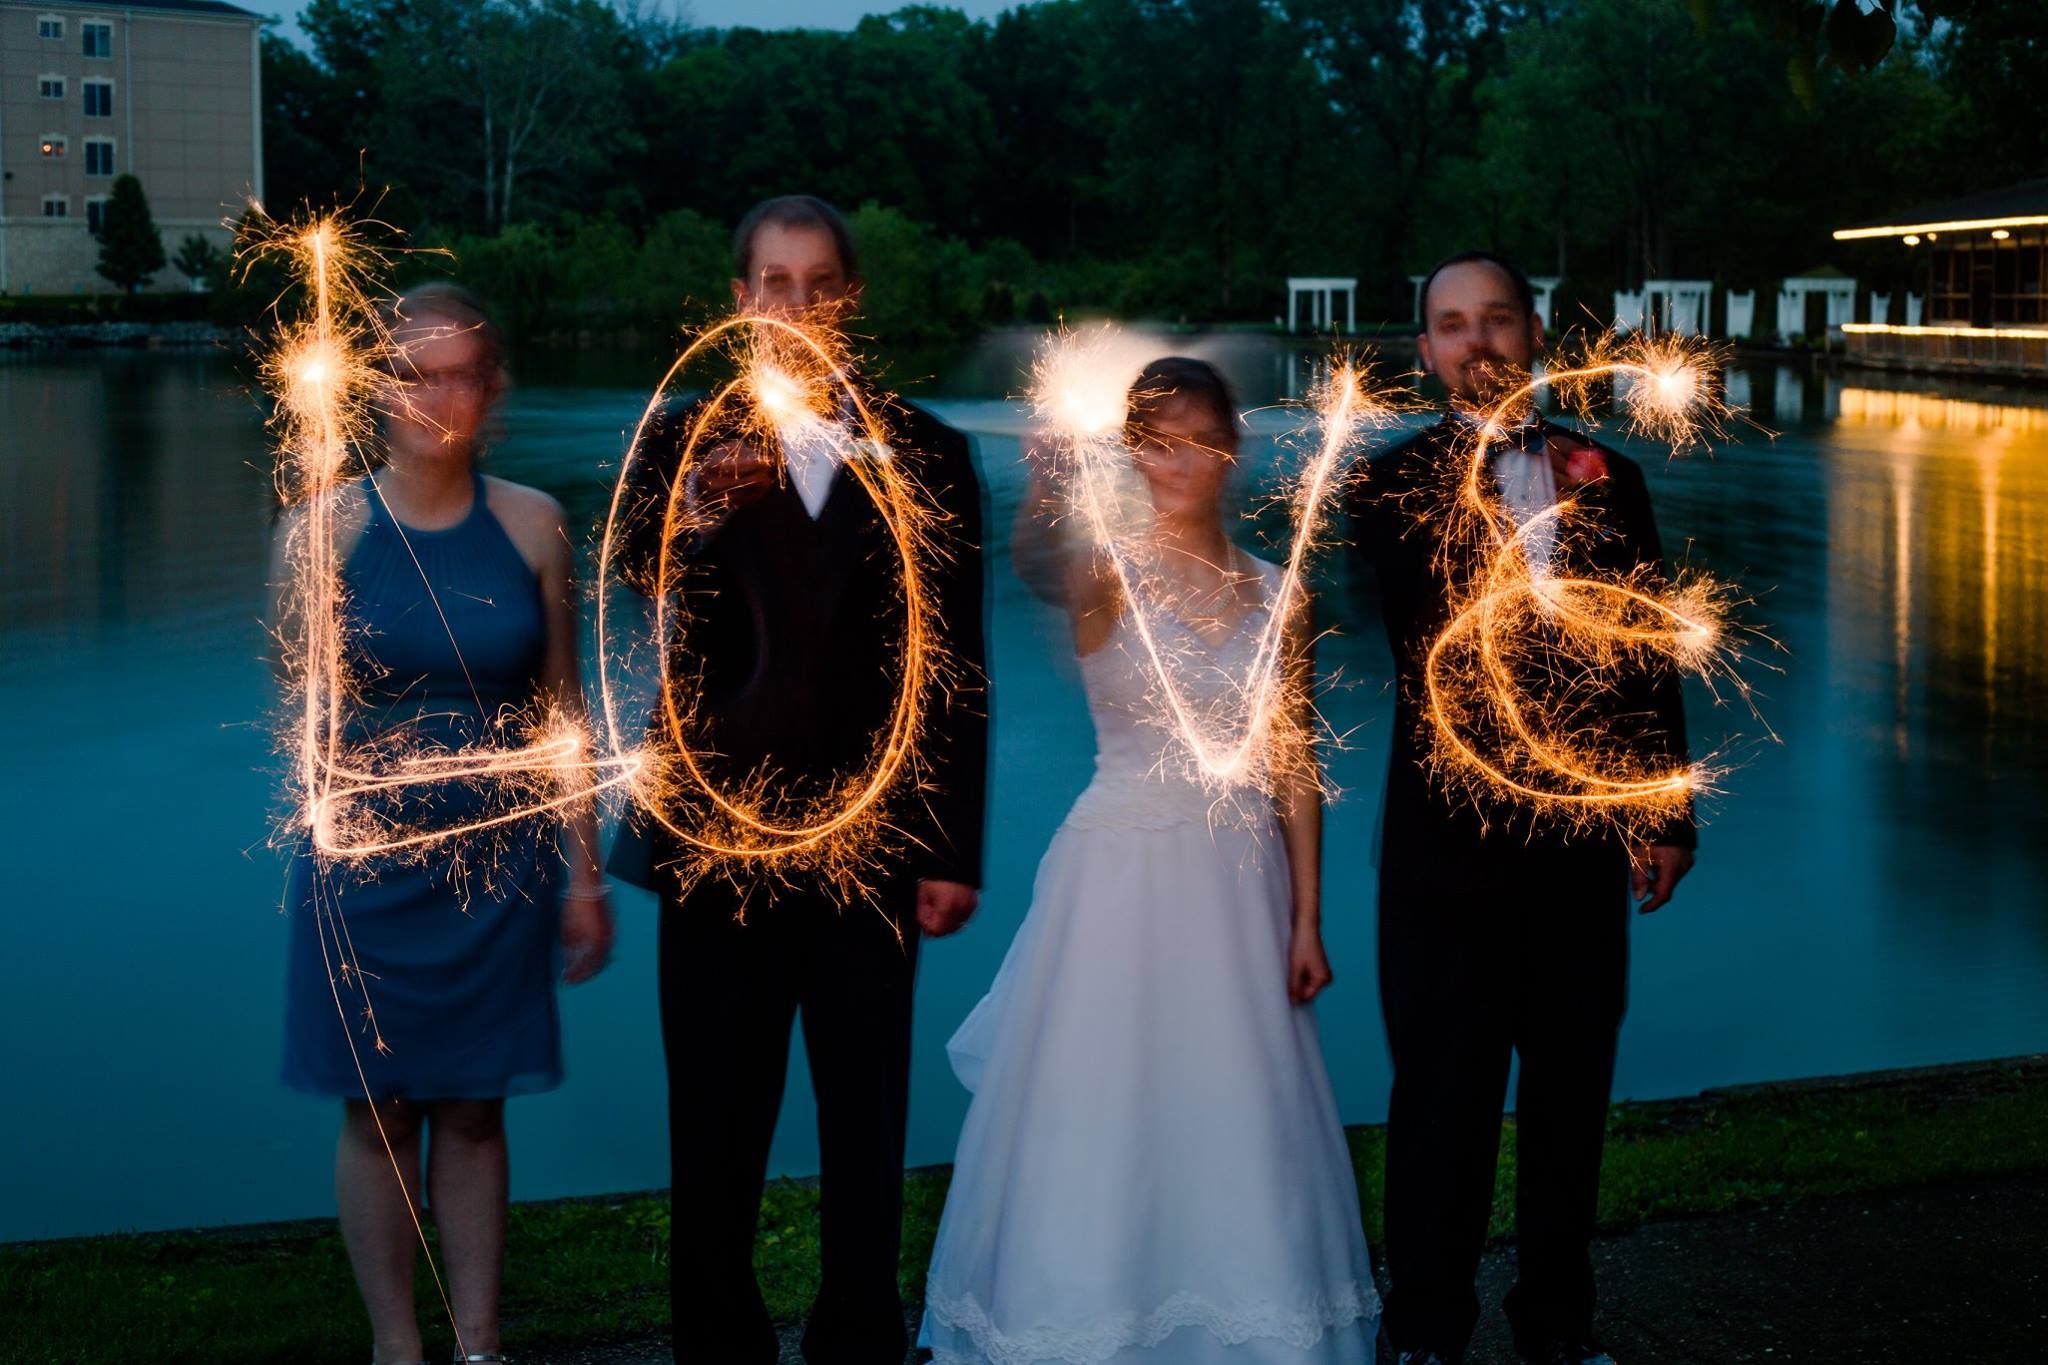 Sparklers help make great wedding photos!